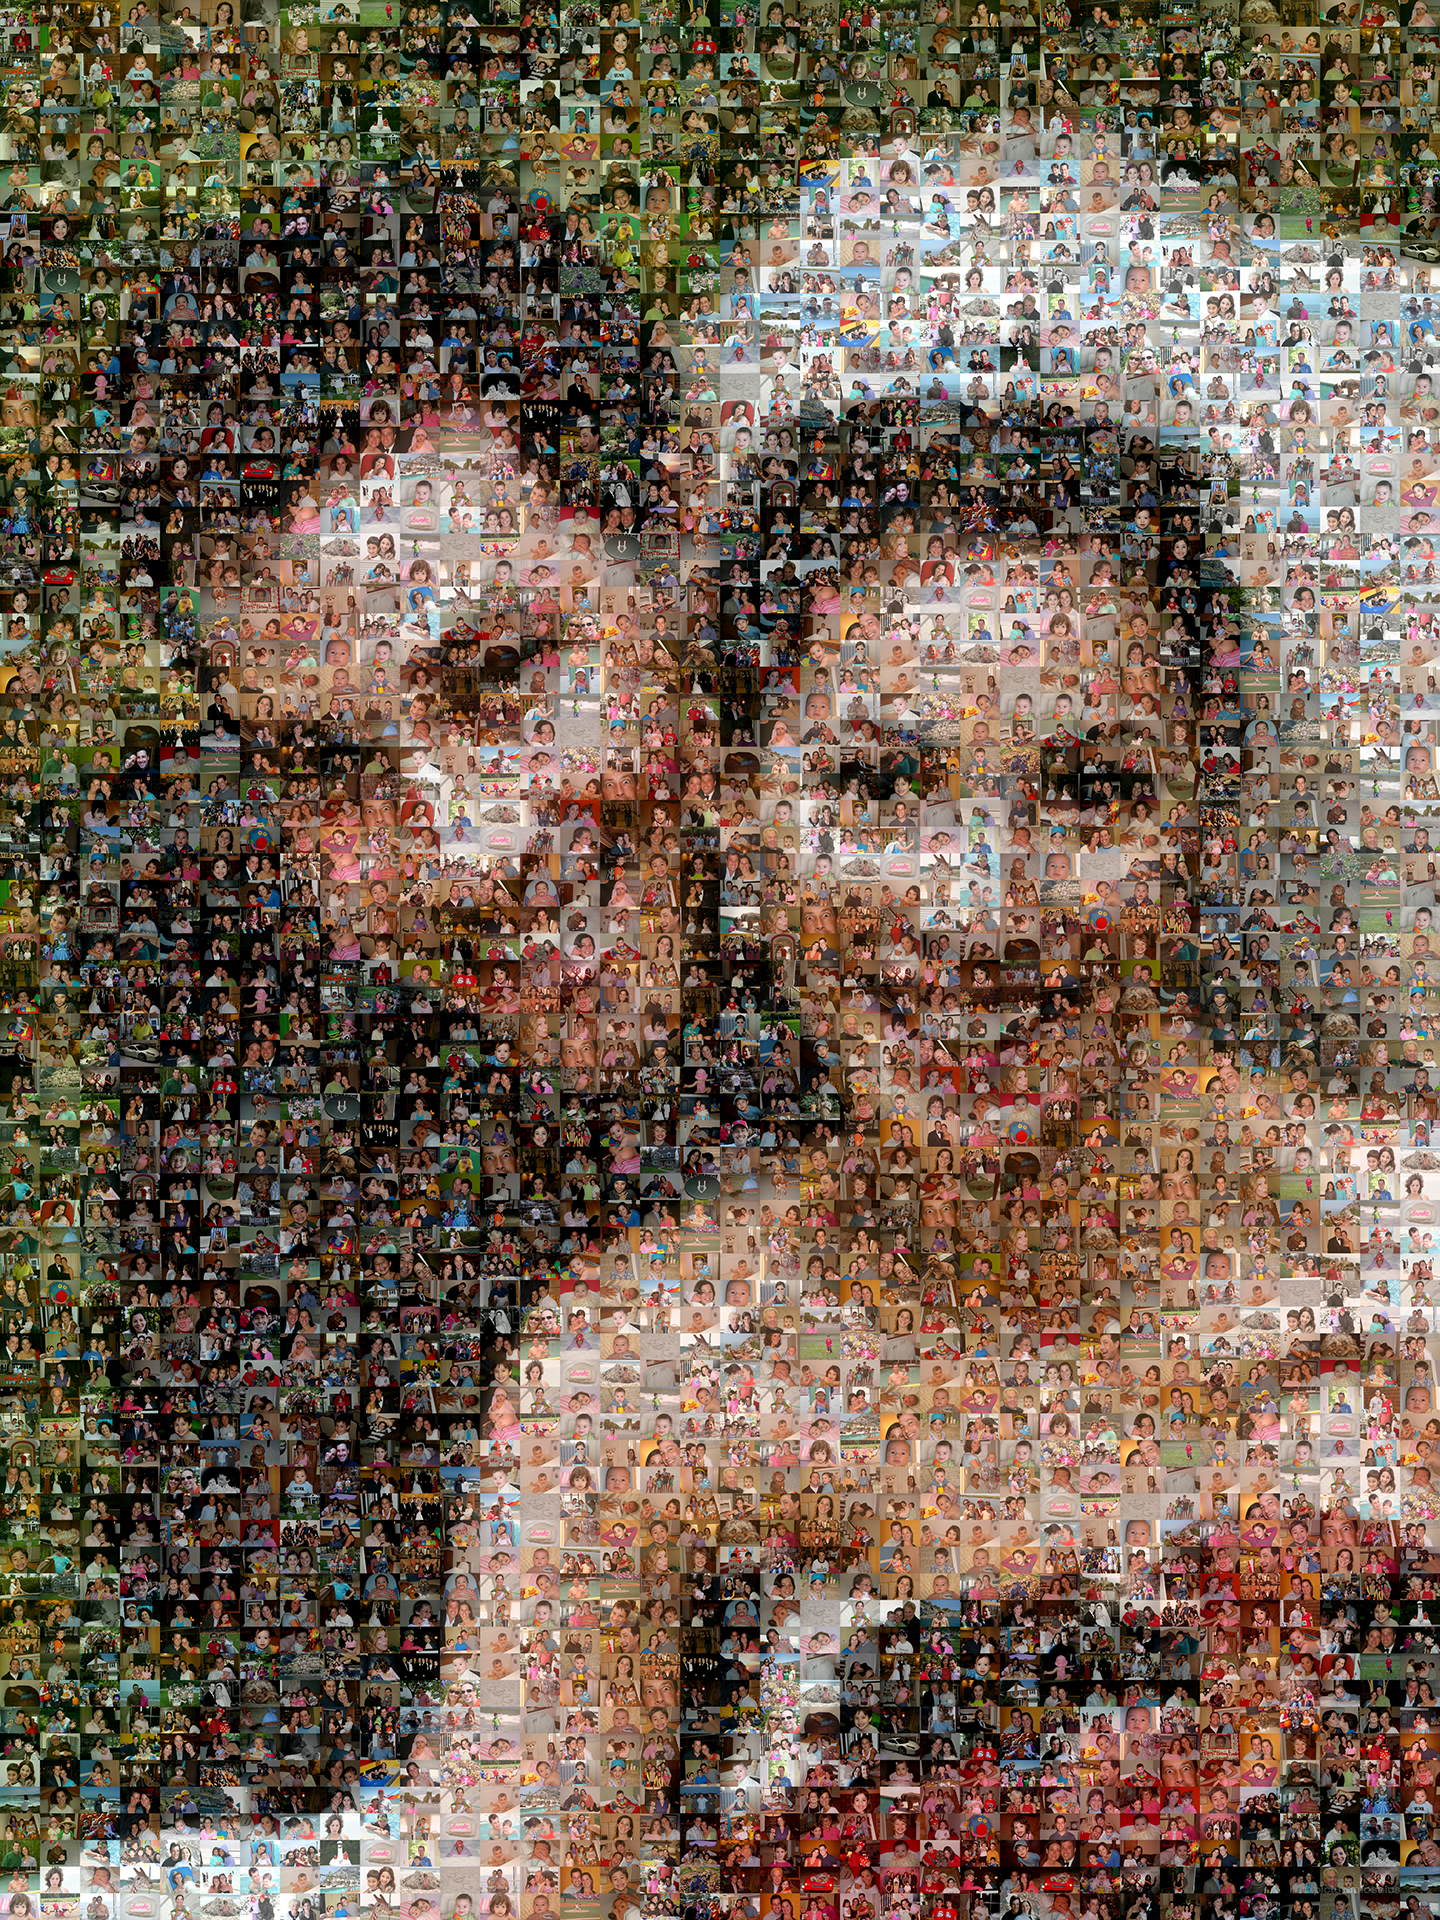 photo mosaic created using 413 family photos